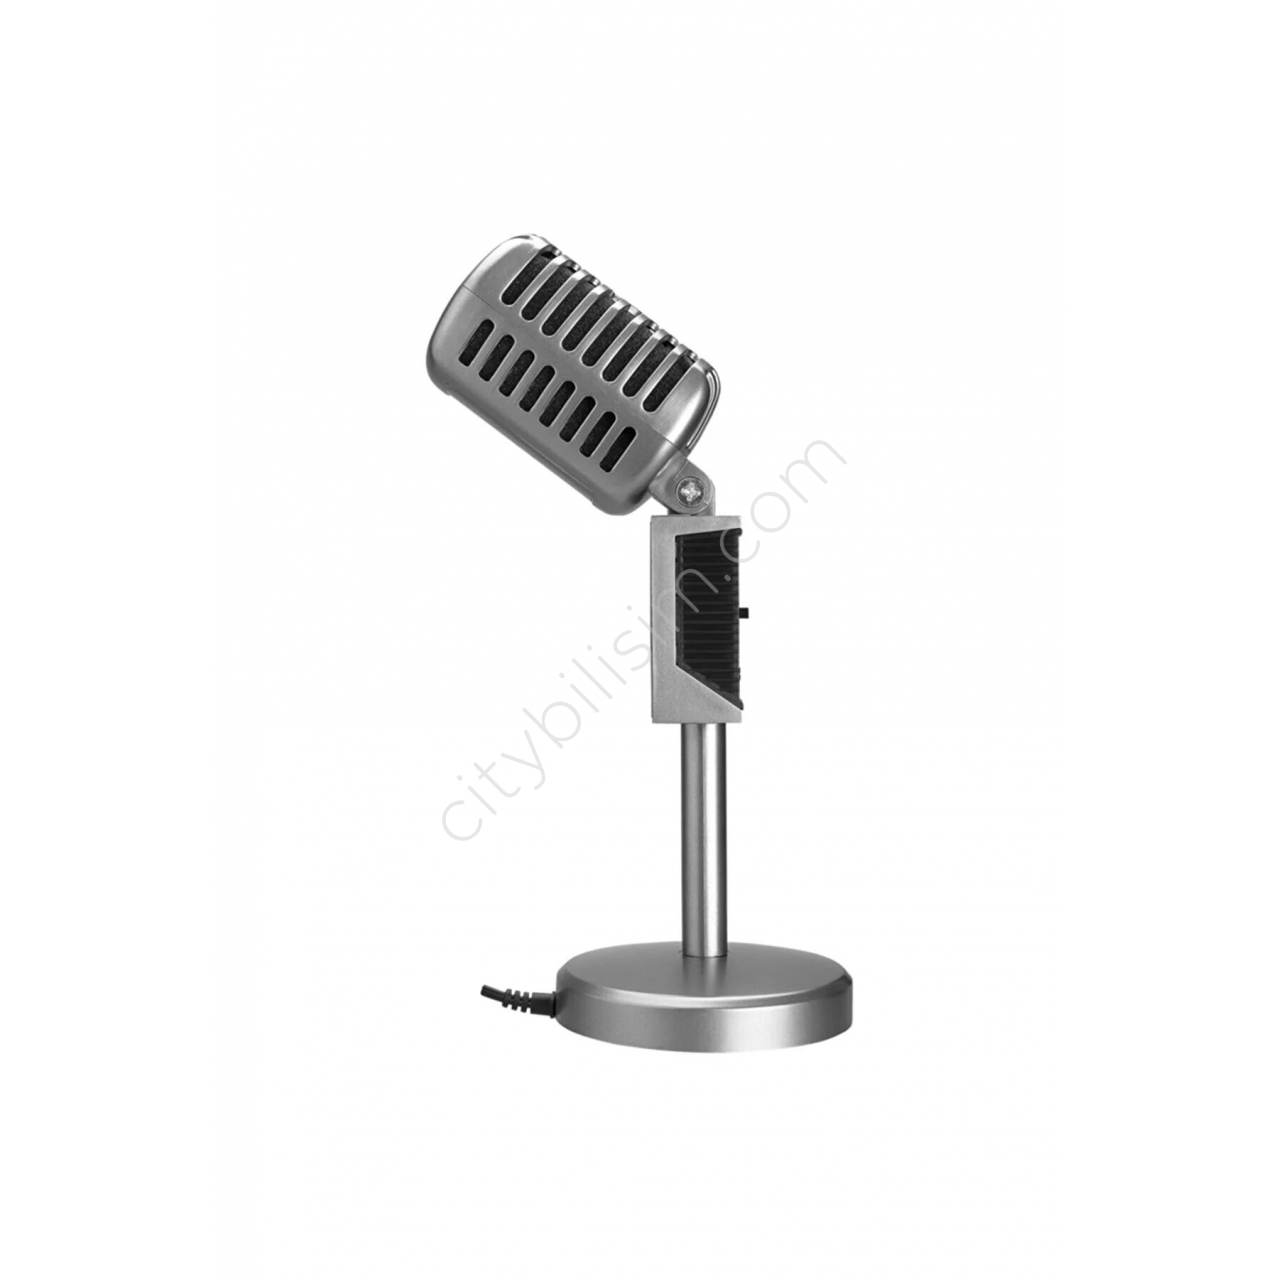 Snopy SN-150M Nostaljik Masaüstü Mikrofon